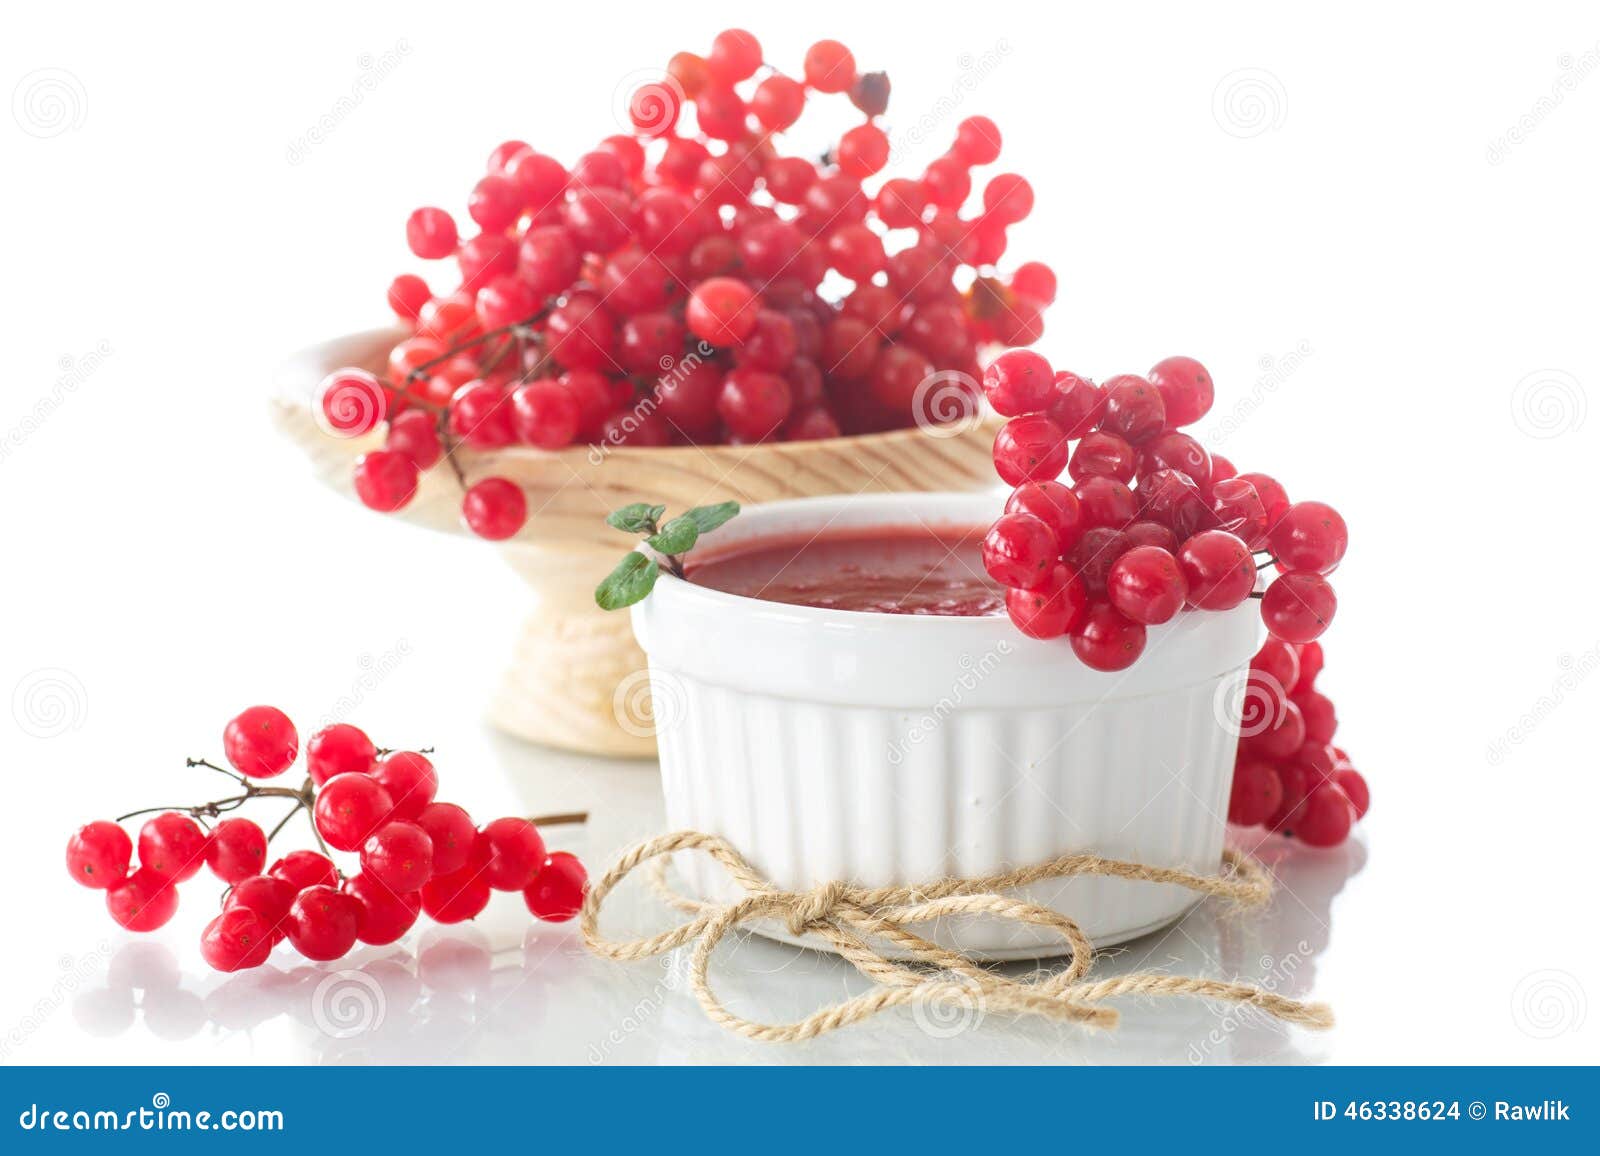 Viburnum jam. Guelder rose jam with fresh sweet viburnum on a white background